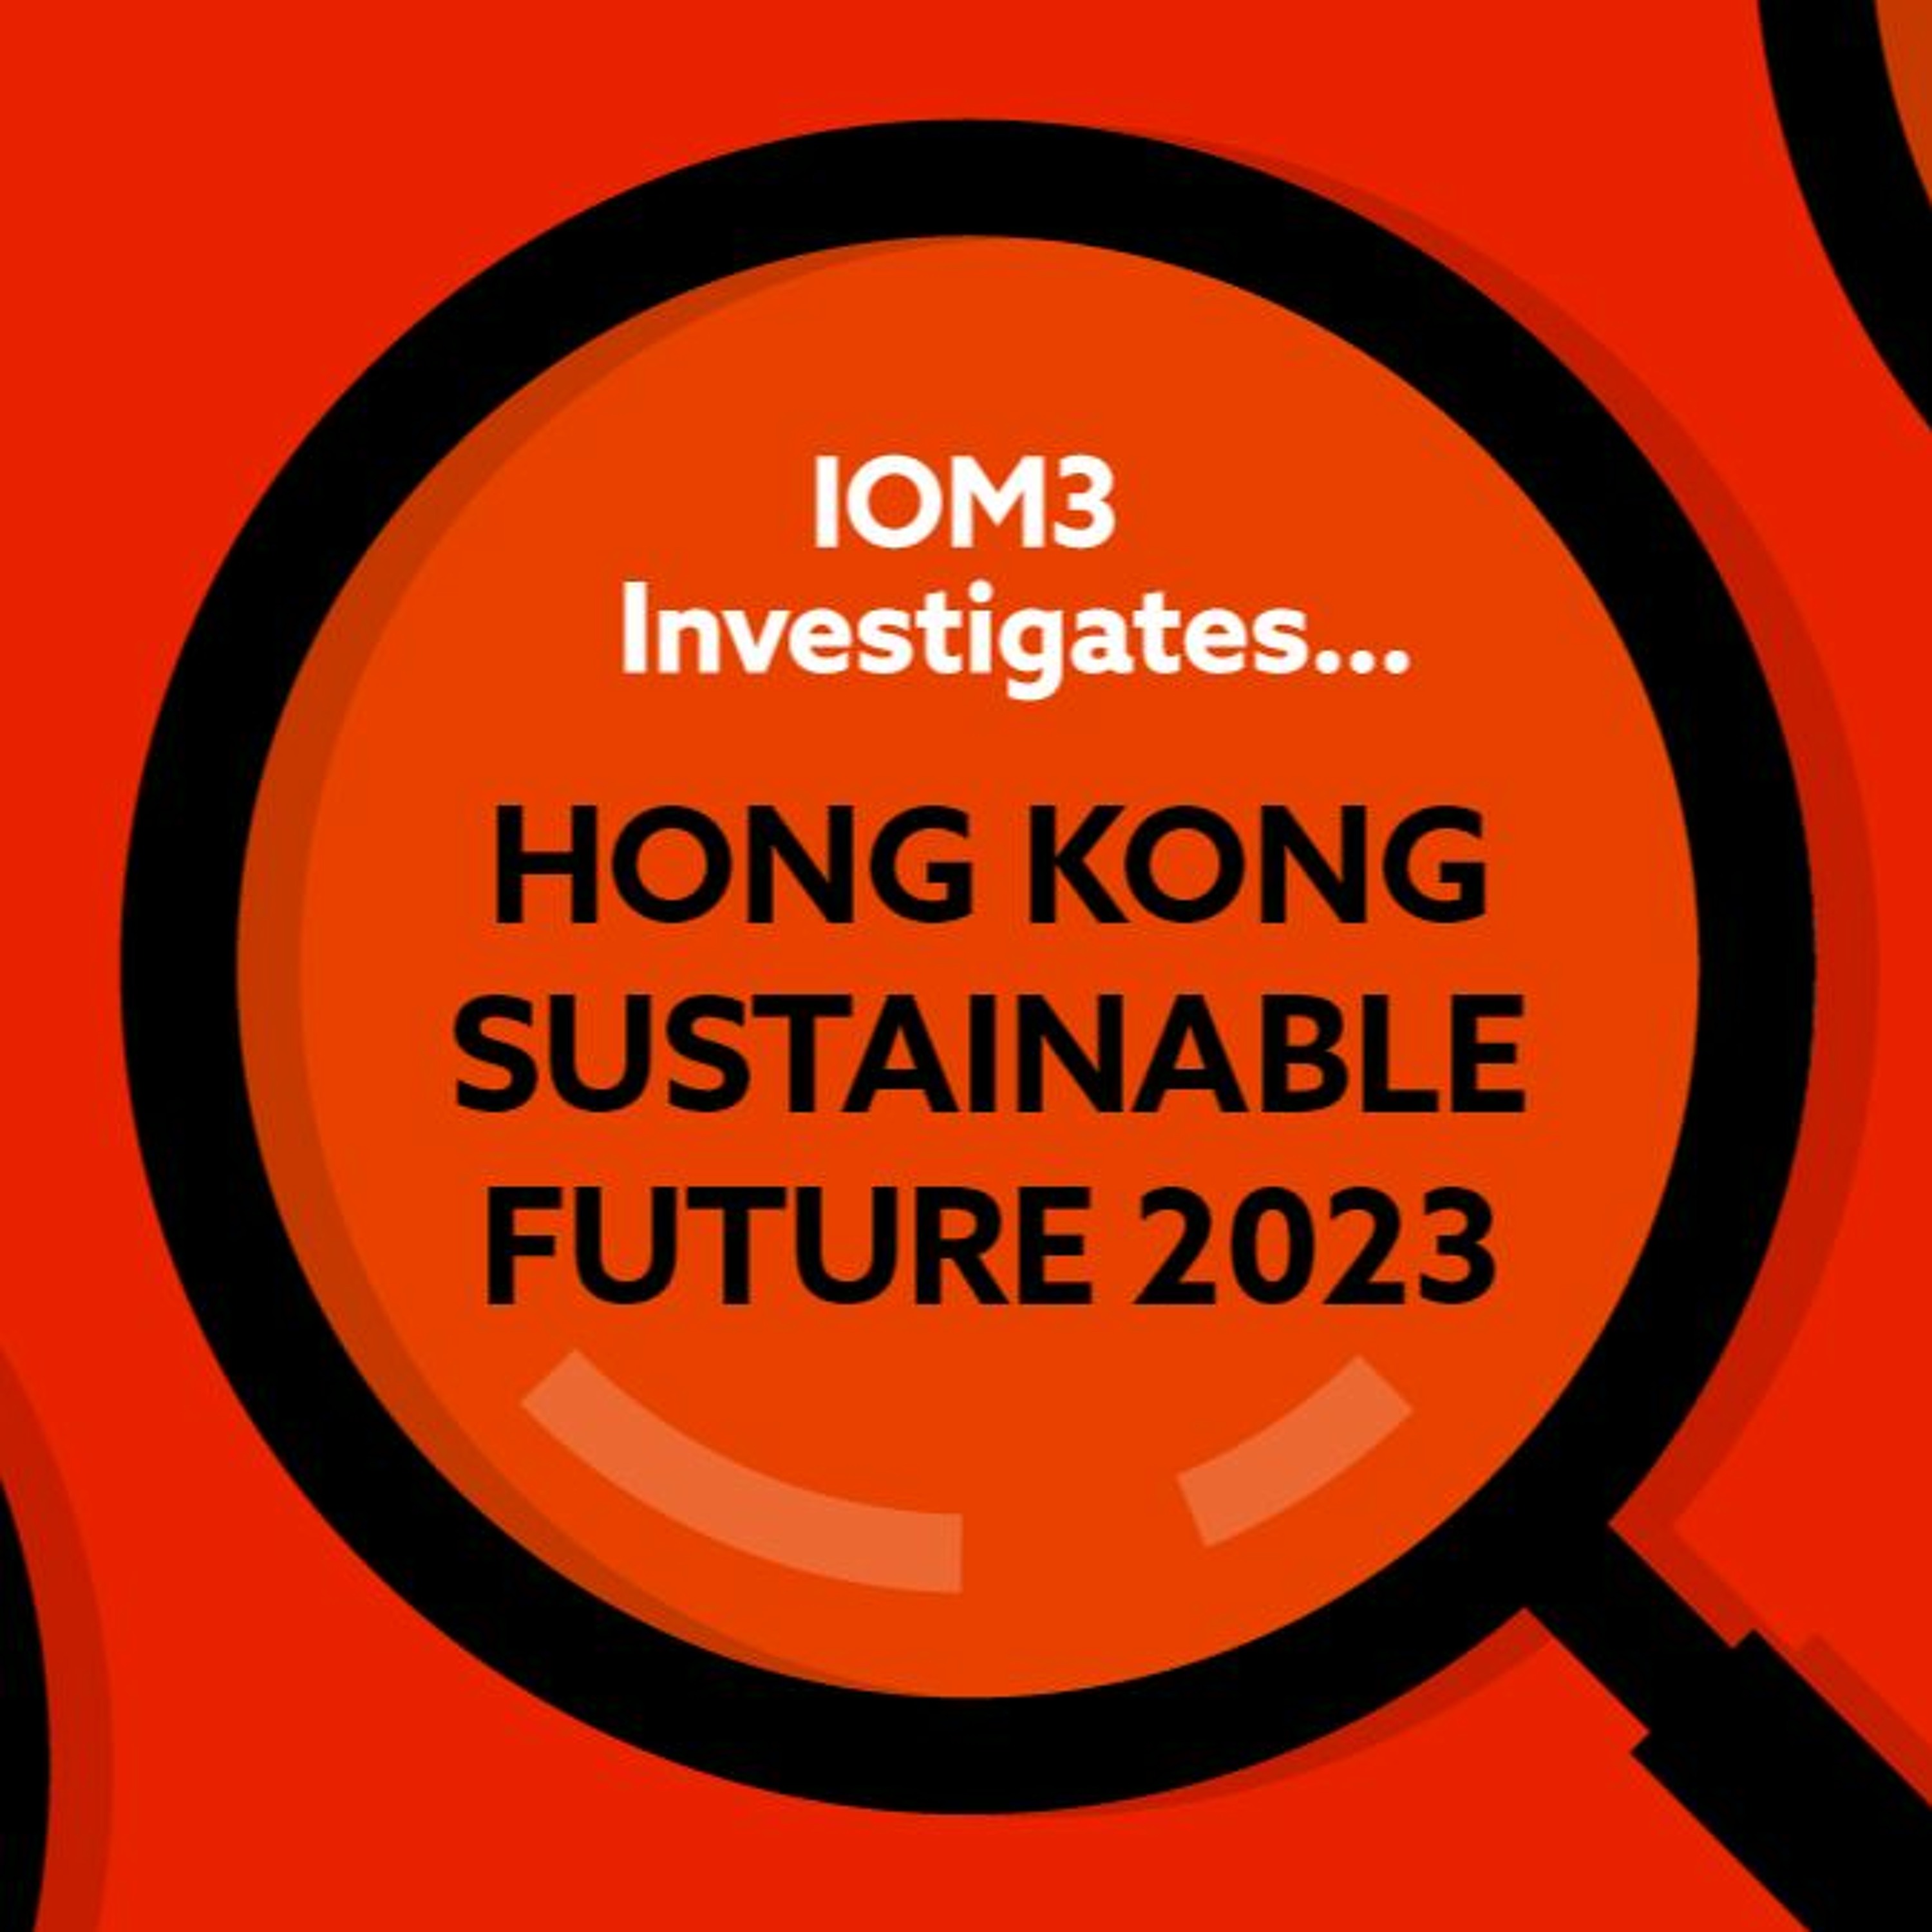 IOM3 Investigates... Hong Kong Sustainable Future 2023